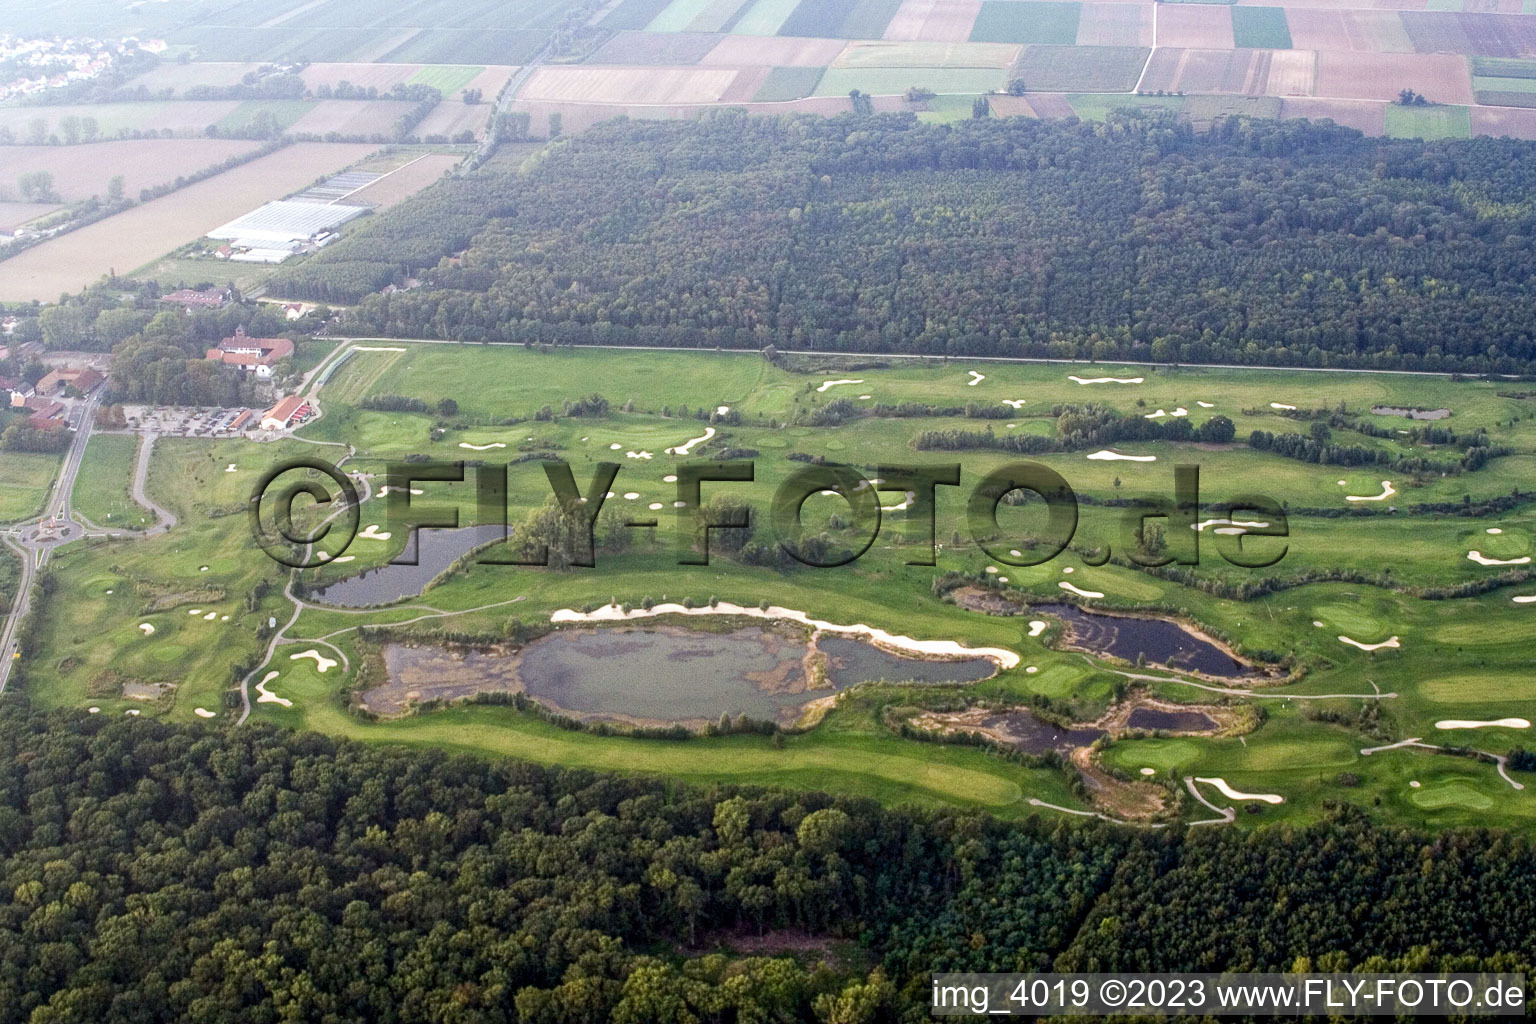 Golf Club Landgut Dreihof SÜW in Essingen in the state Rhineland-Palatinate, Germany seen from a drone